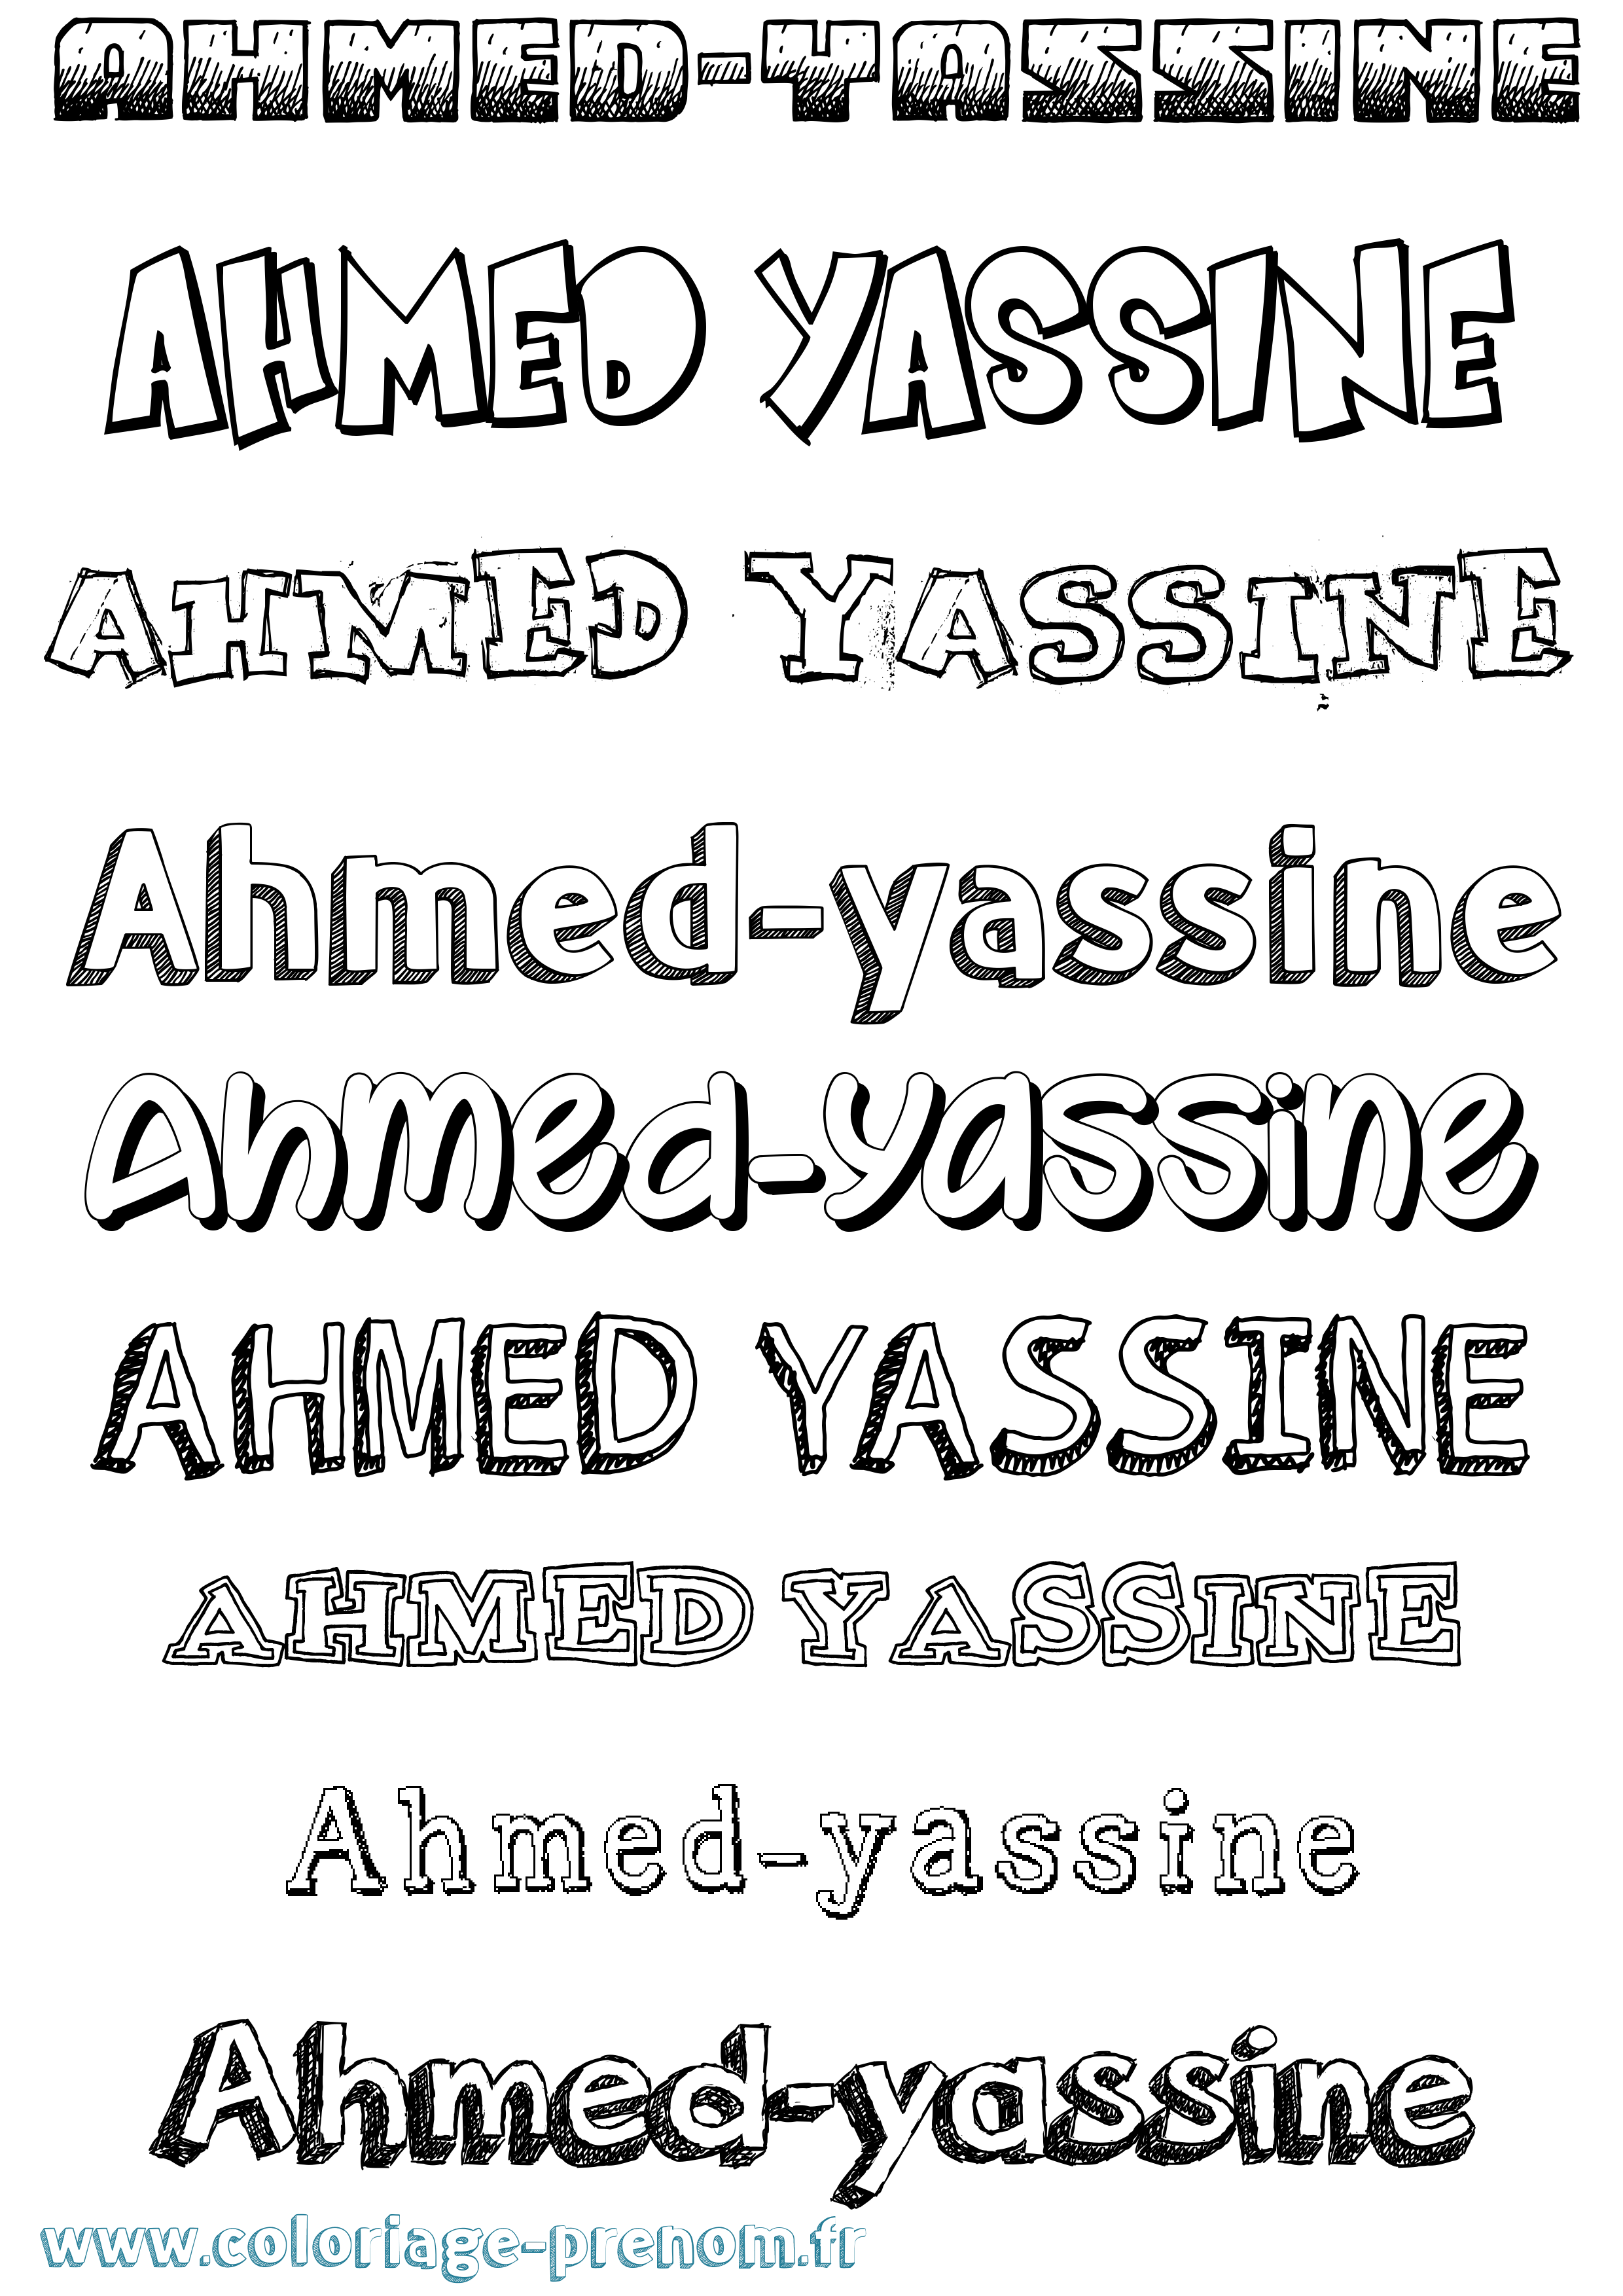 Coloriage prénom Ahmed-Yassine Dessiné